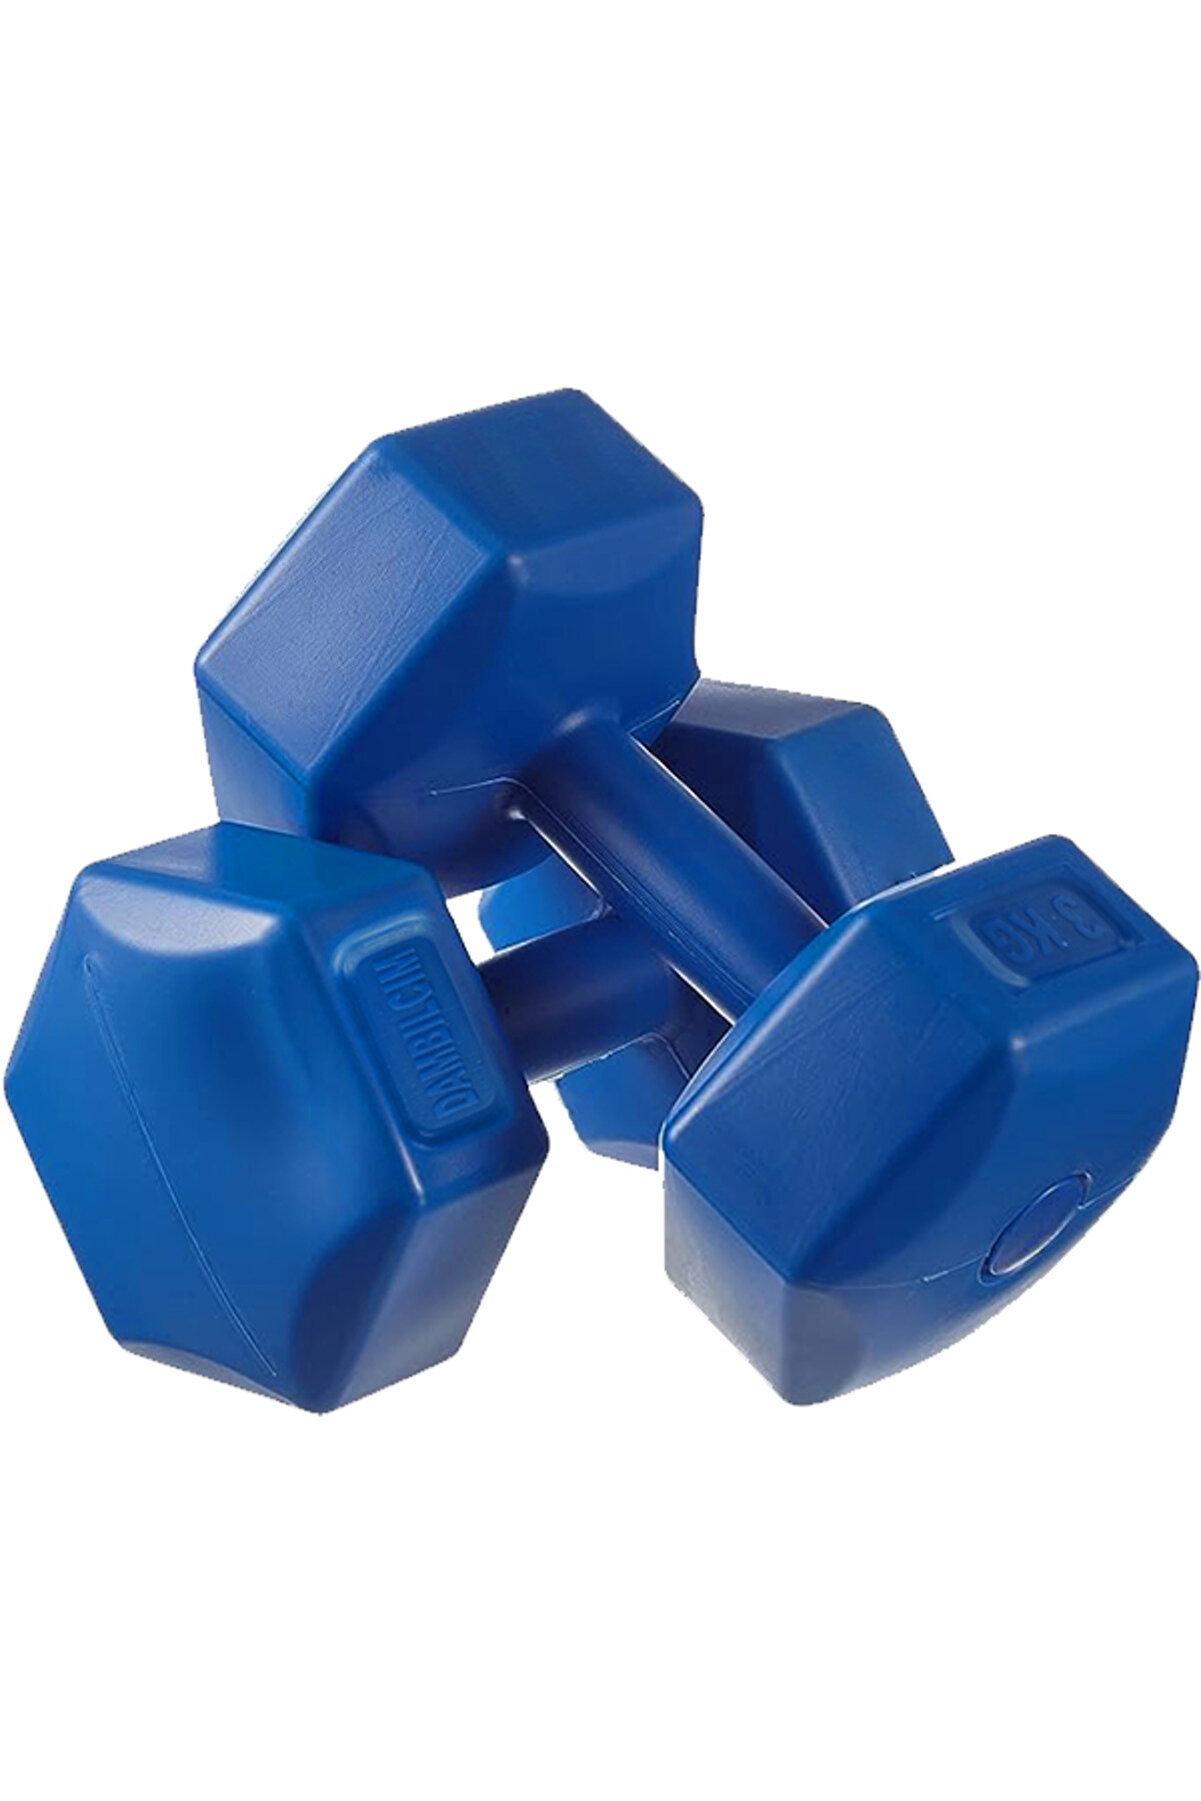 Dambılcım Mavi 3 KG x 2 Adet 6 KG Dambıl Seti 6 KG Dumbell Set